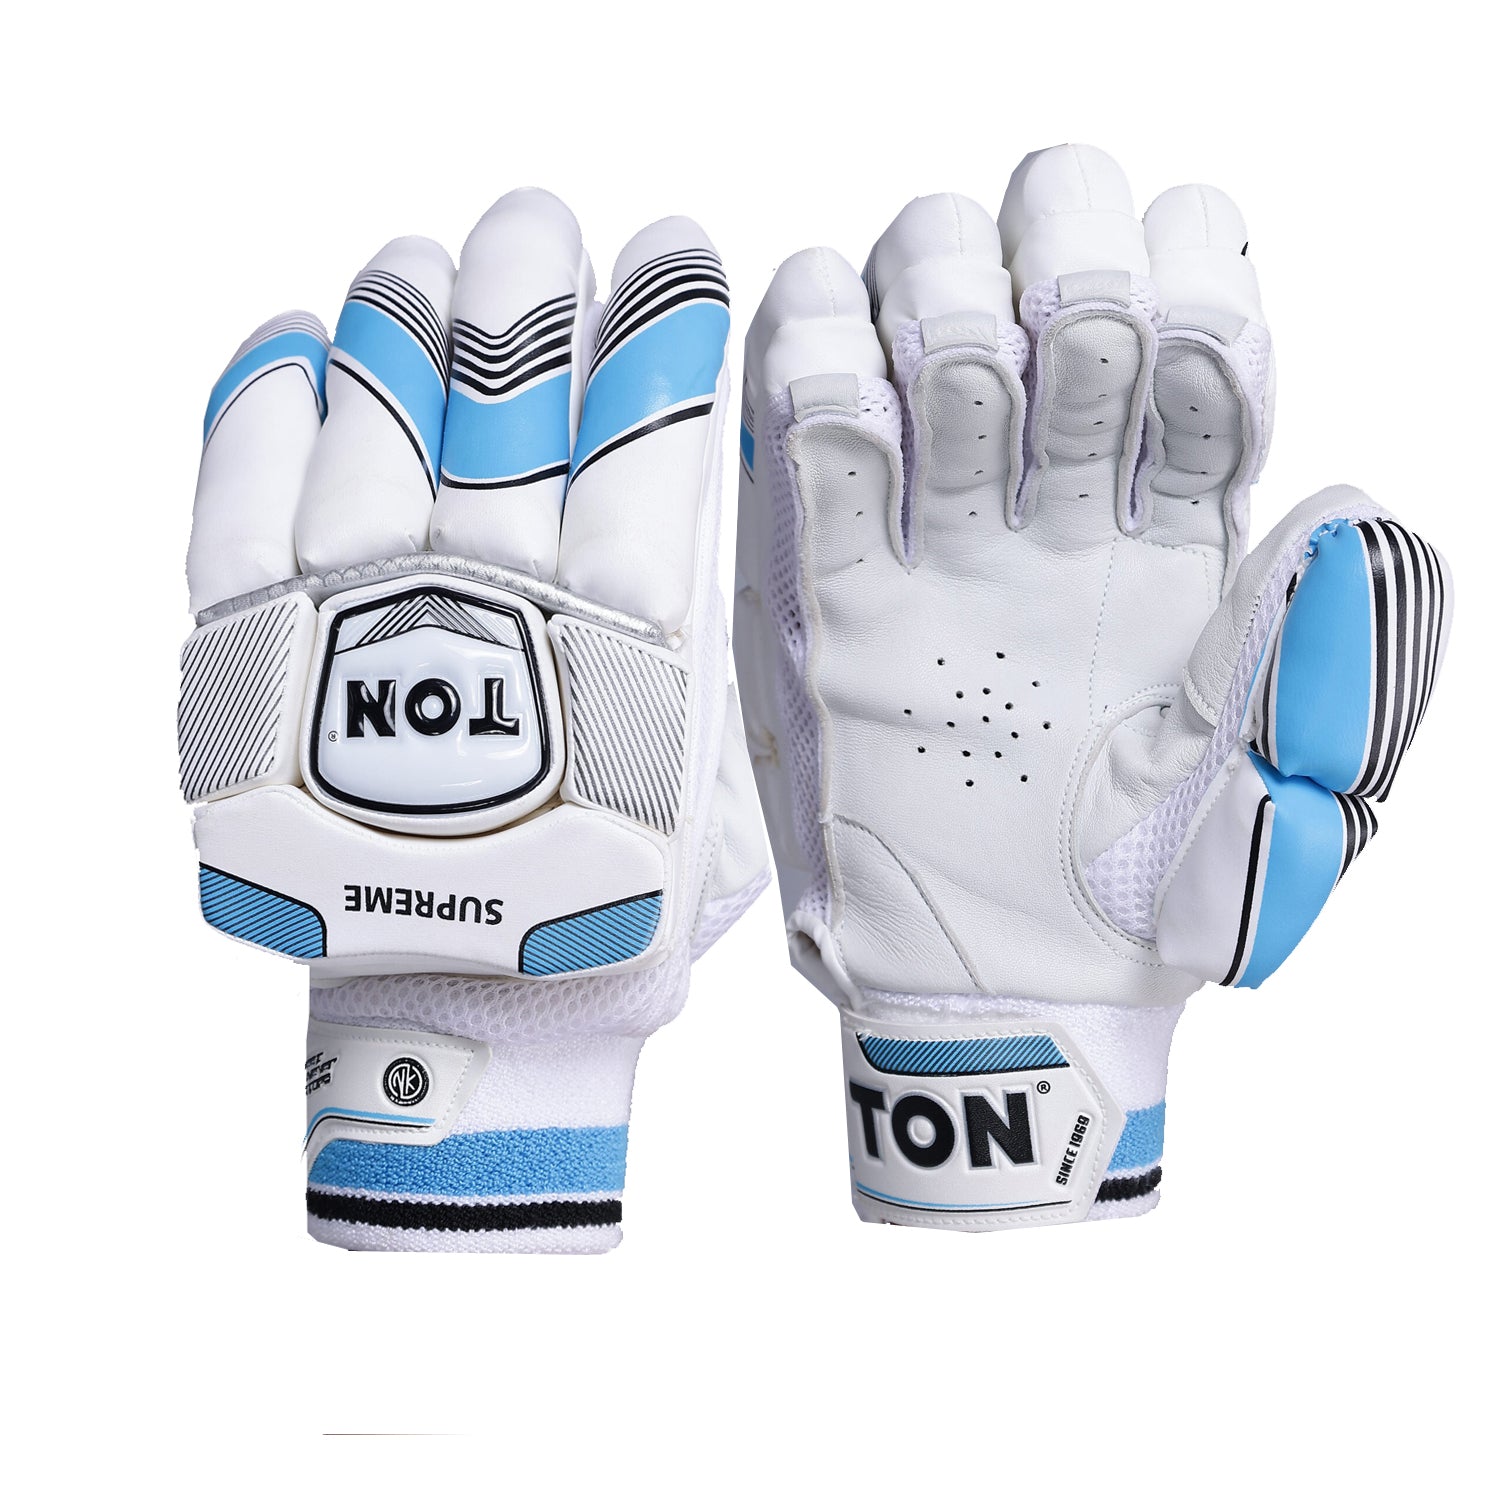 SS Ton Supreme New RH Cricket Batting Gloves - Adult - Best Price online Prokicksports.com